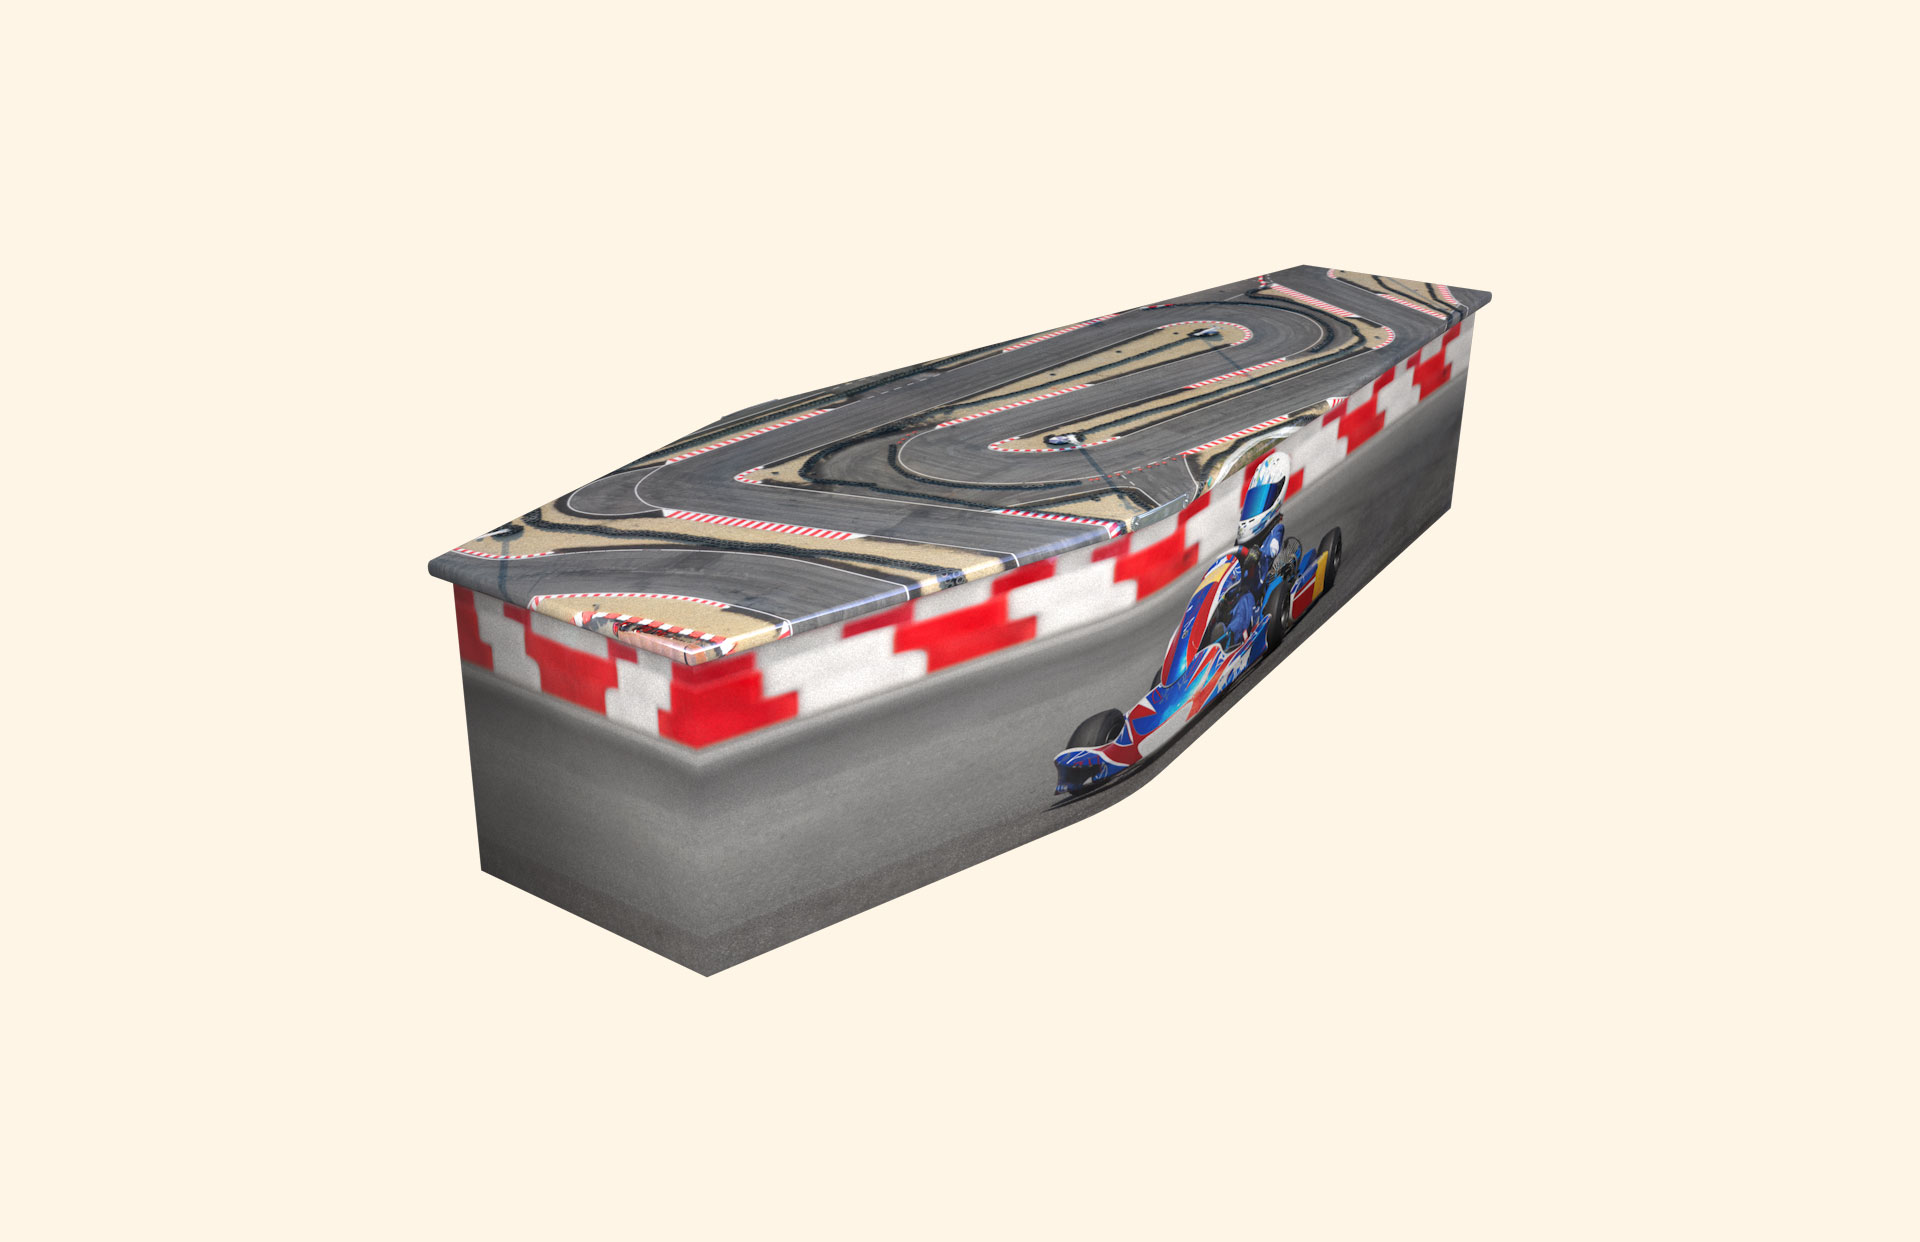 Go Karting design on a child coffin